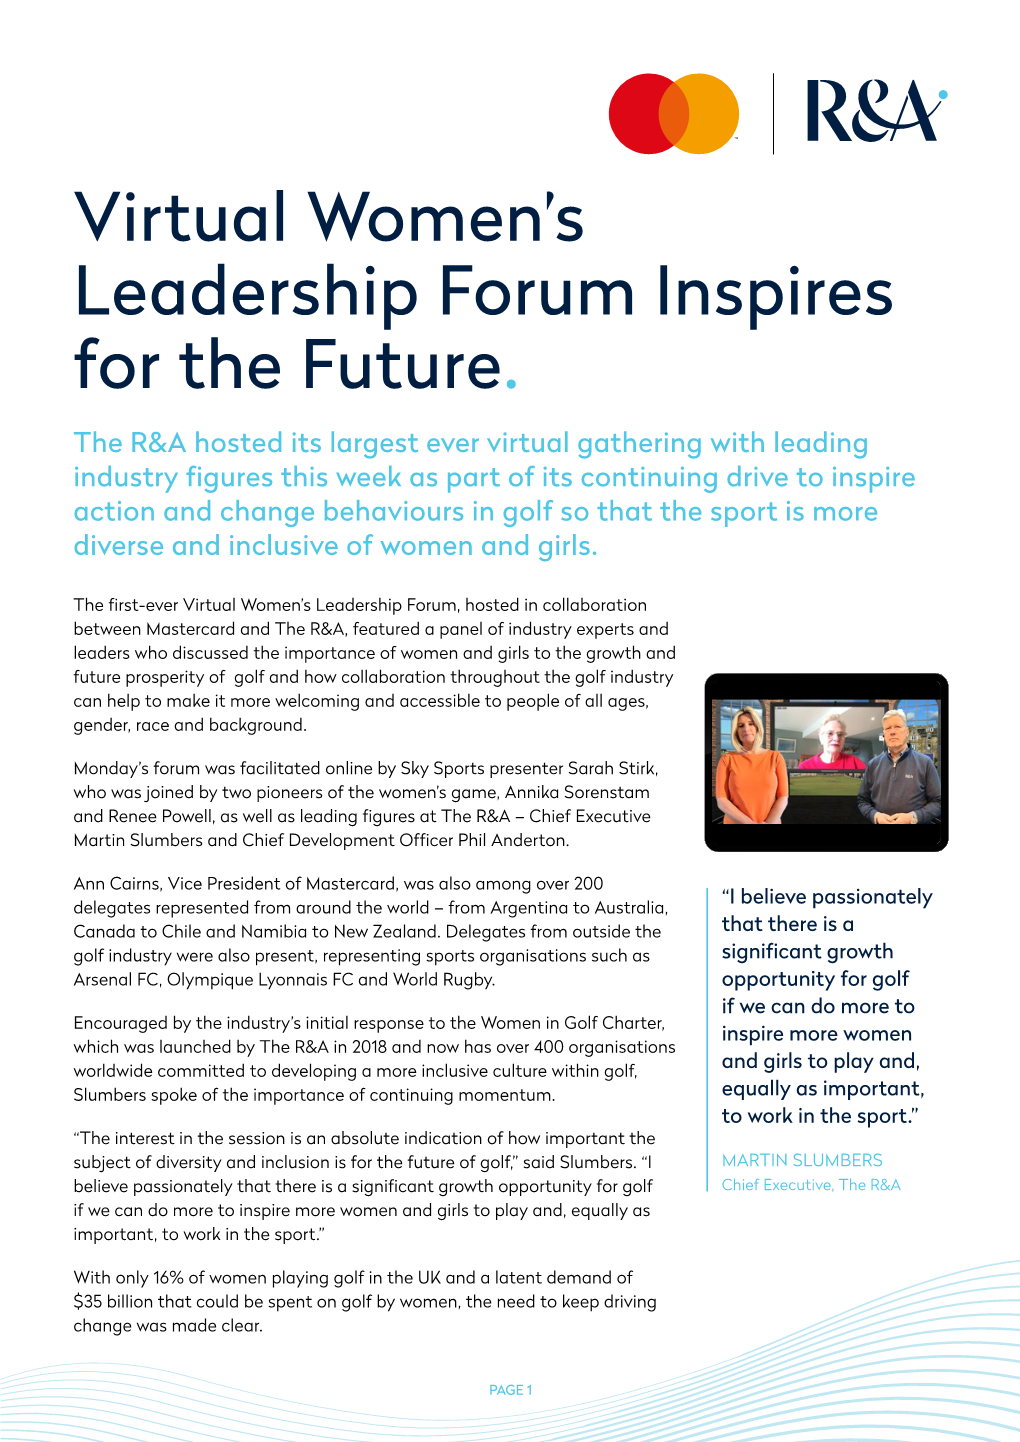 Virtual Women's Leadership Forum Inspires for the Future